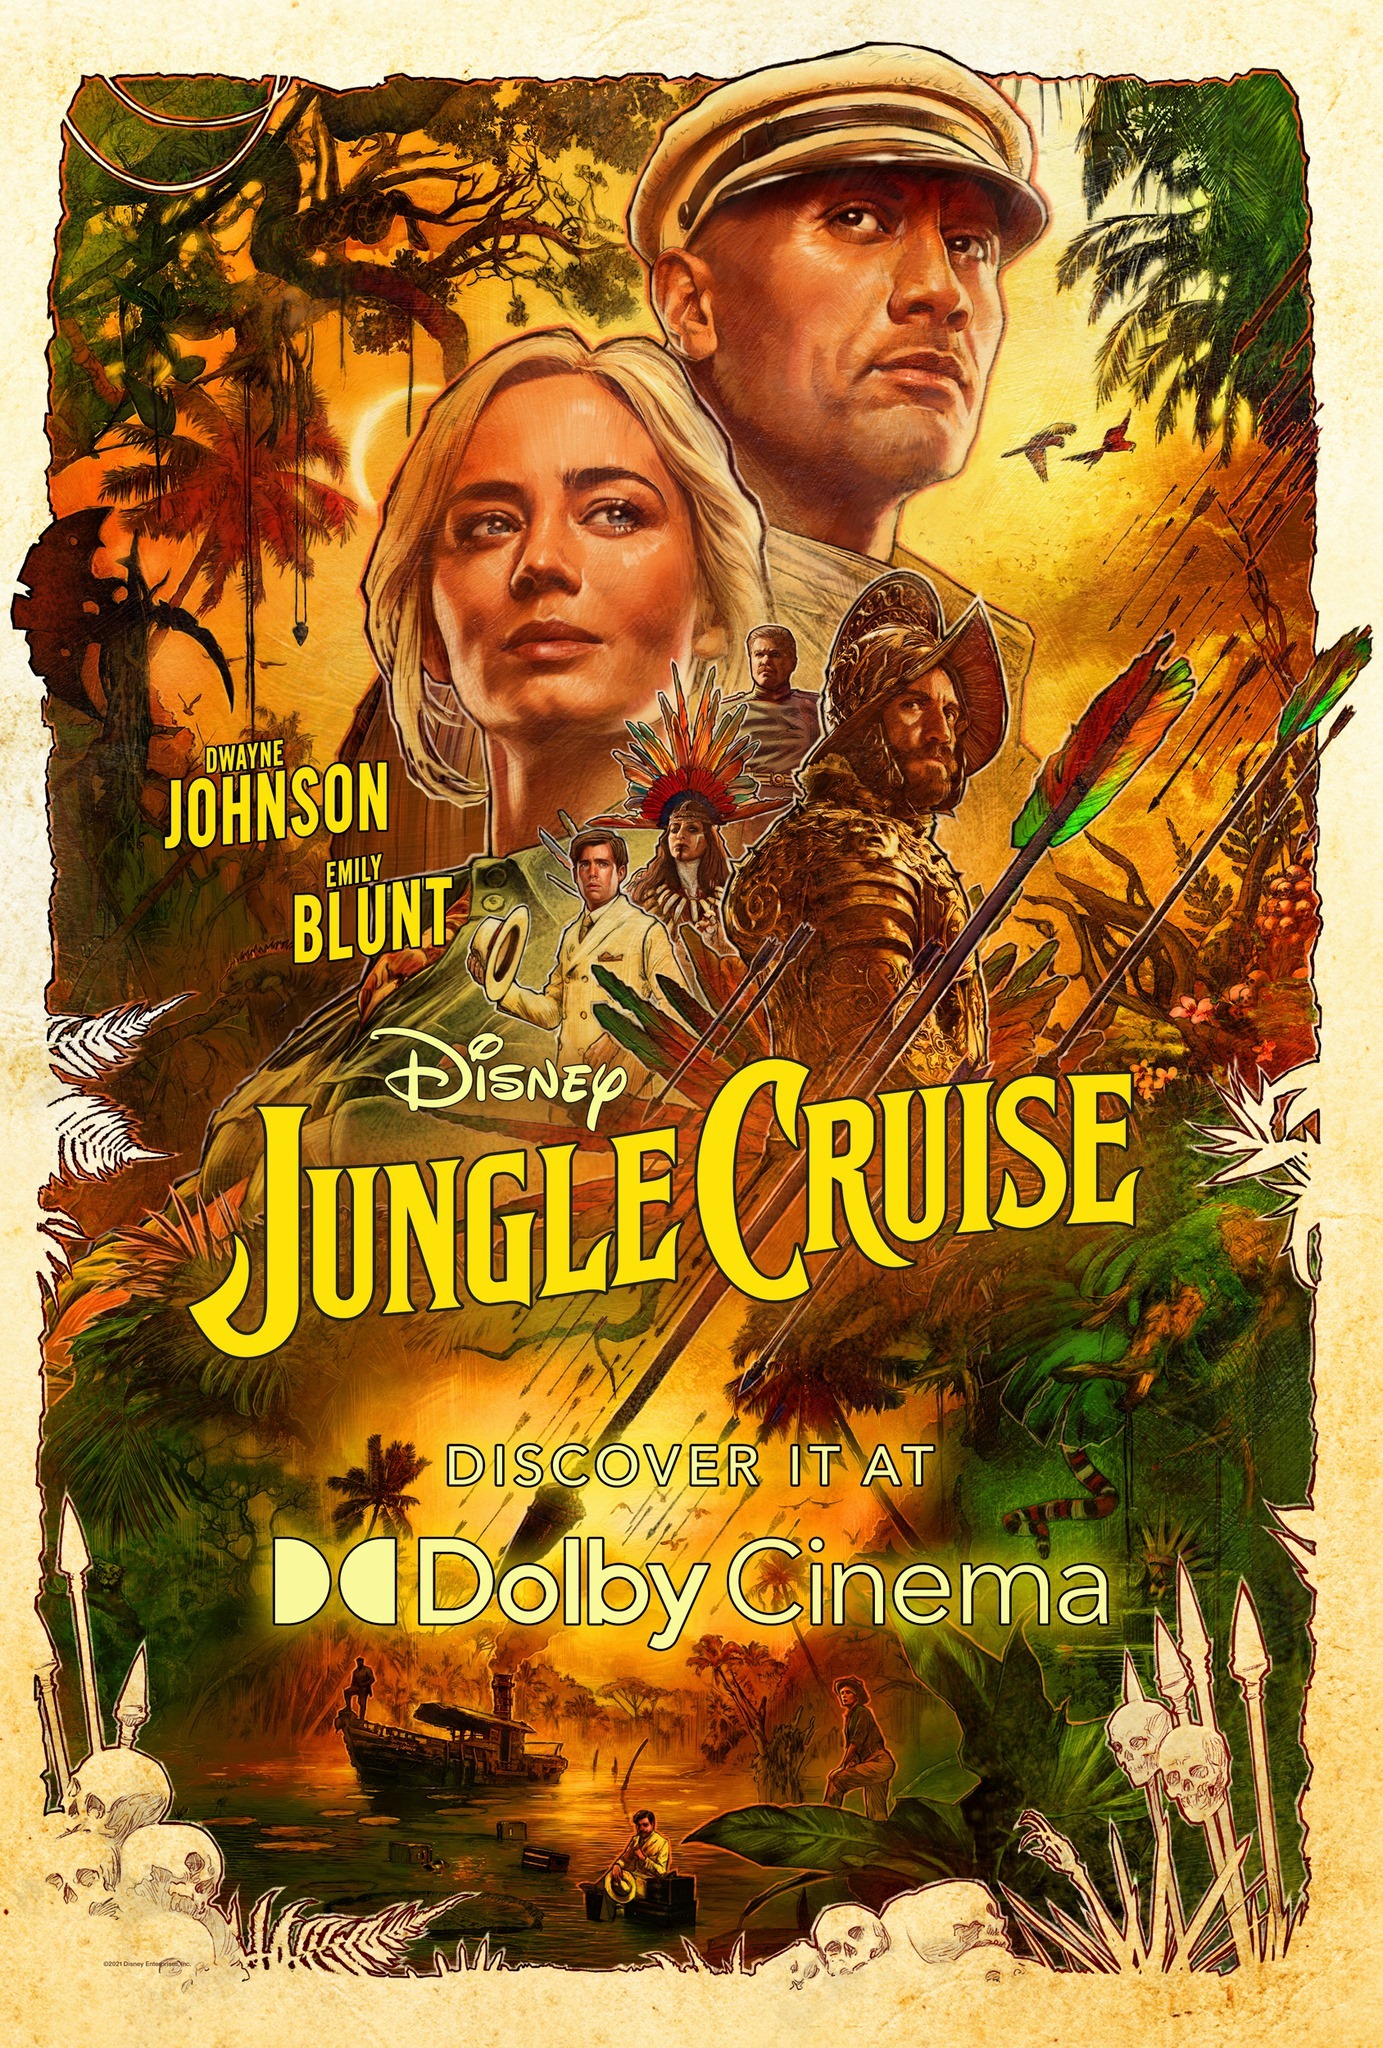 Mega Sized Movie Poster Image for Jungle Cruise (#16 of 26)